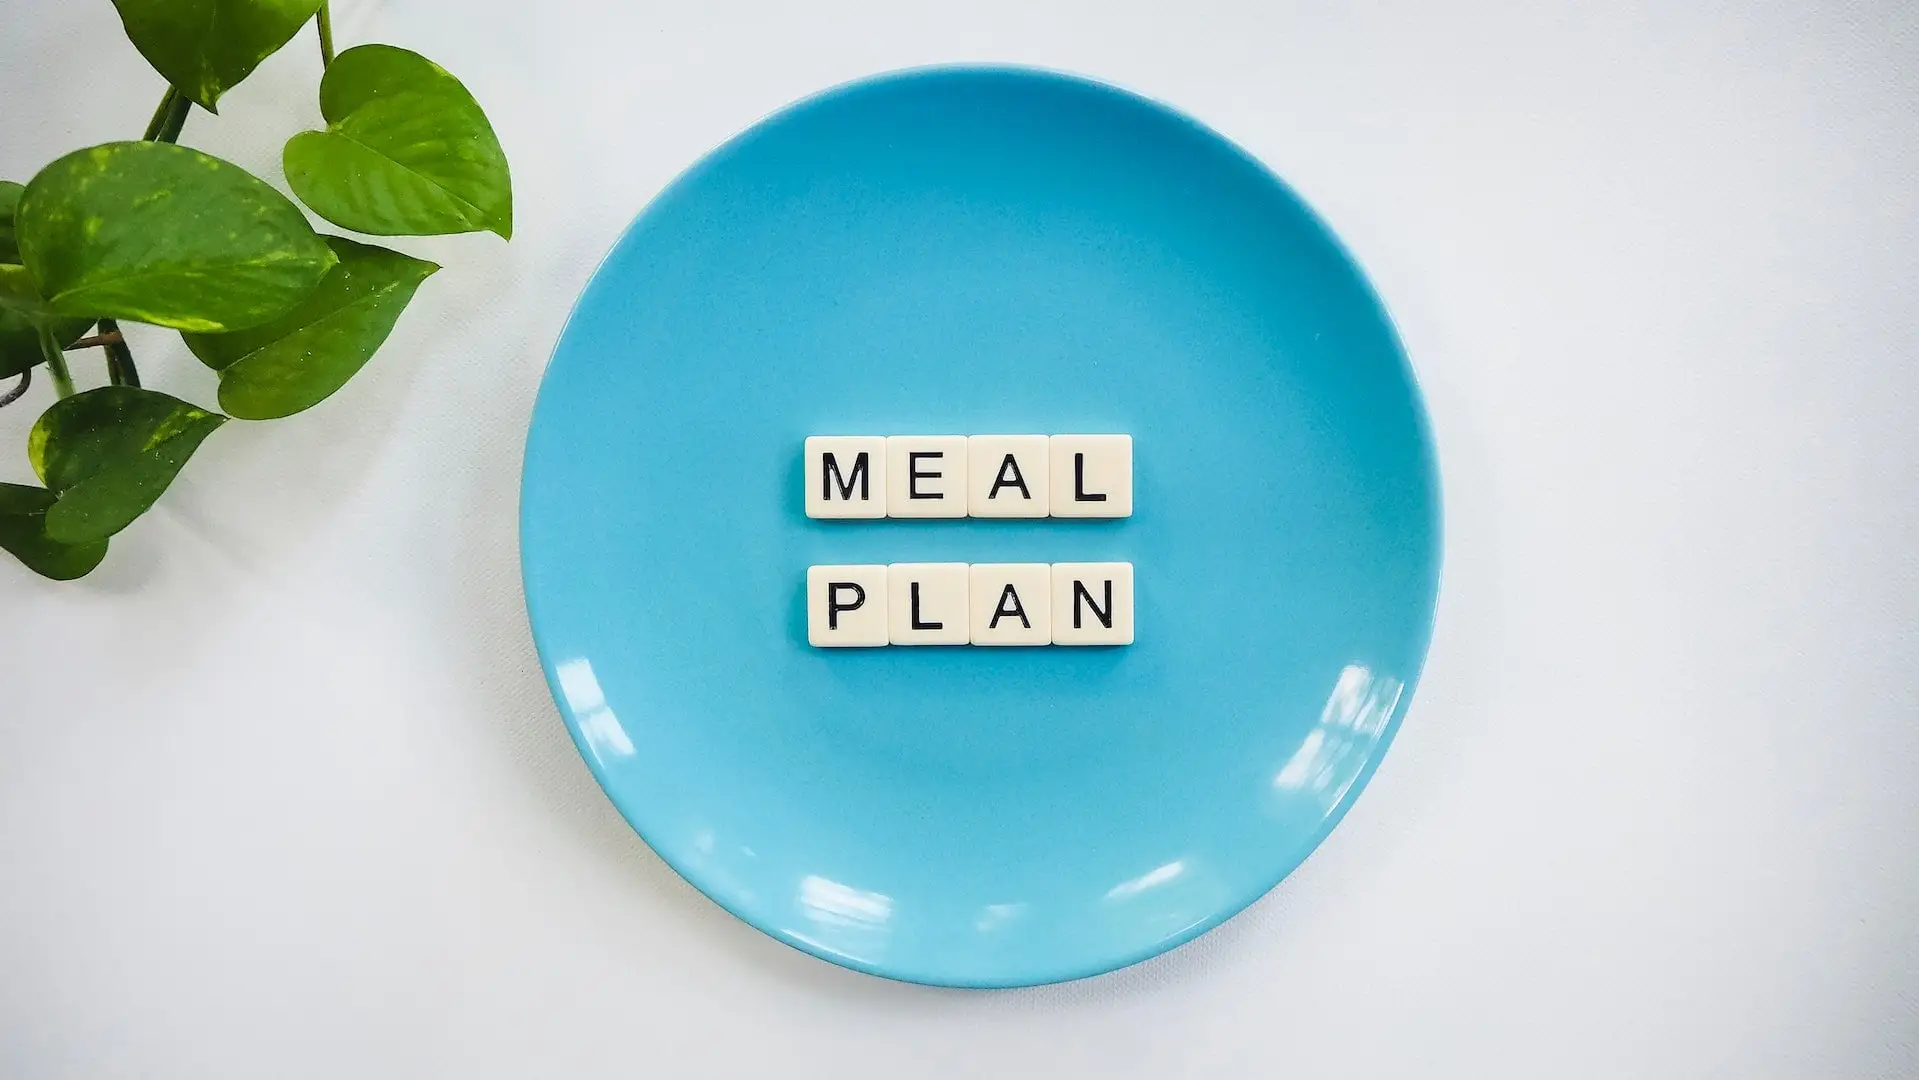 Diet Plan on plate